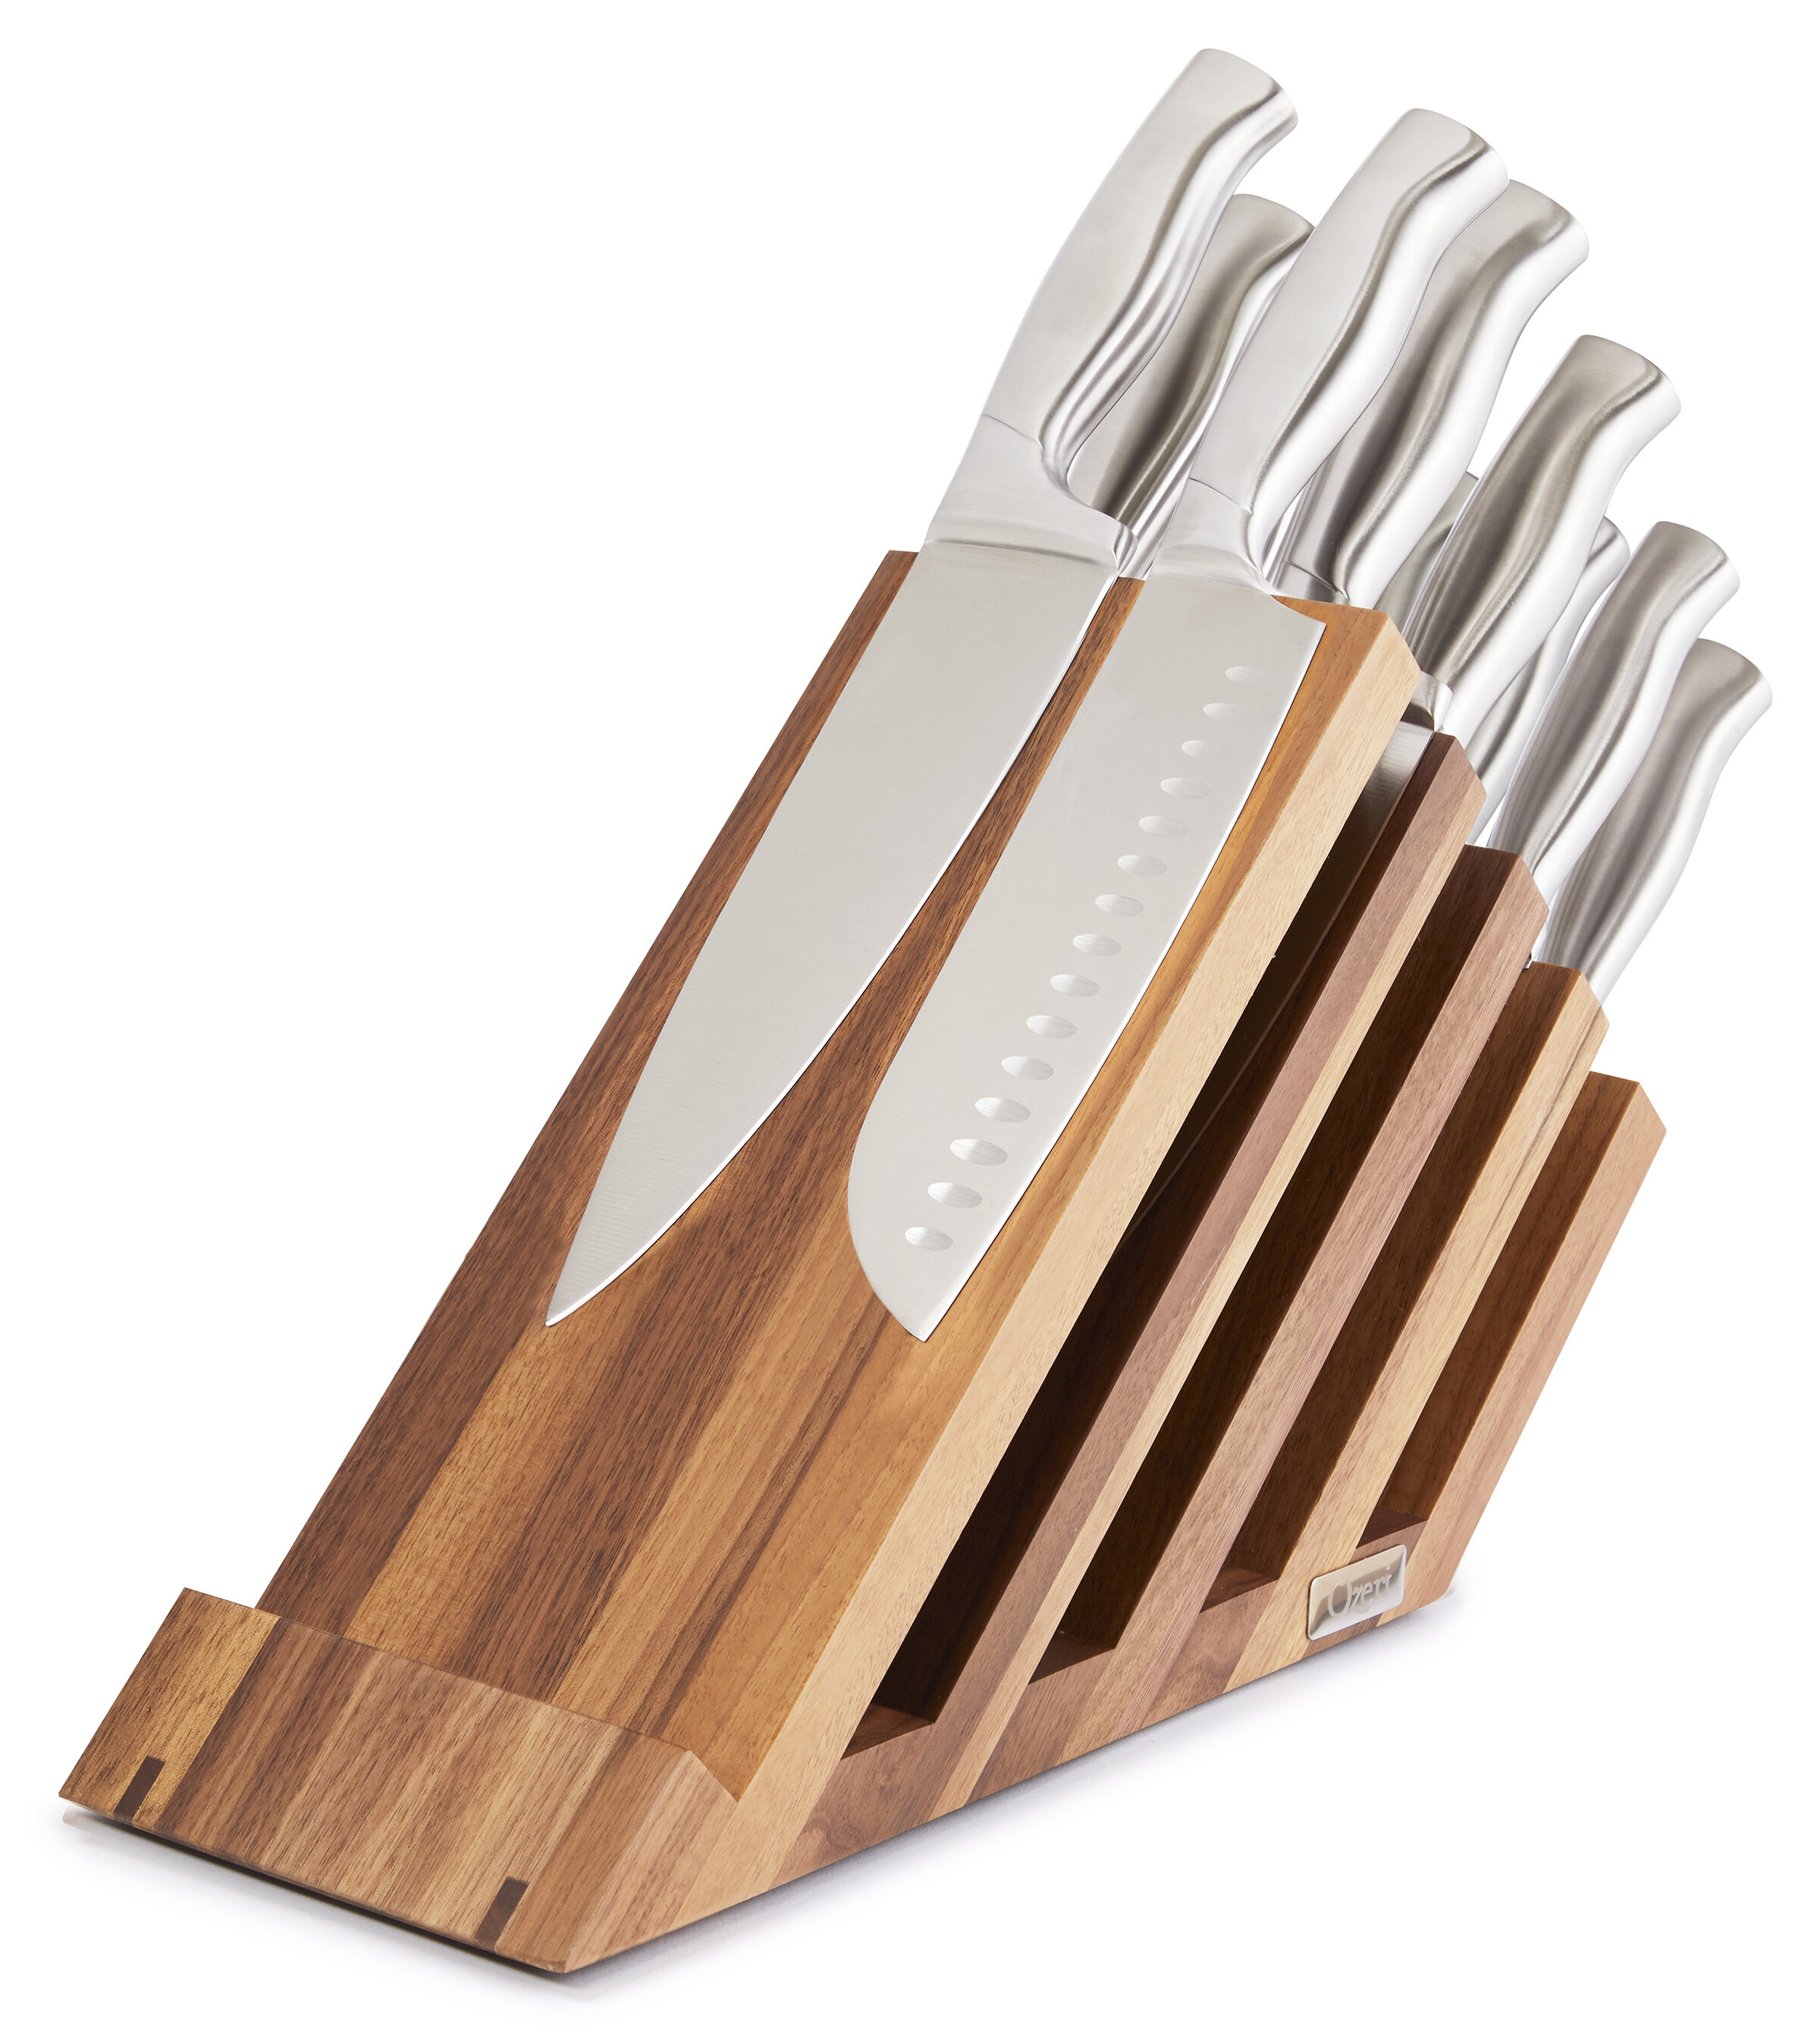 Home Knife Storage Block, Walnut Wooden Knife Block Holder, Universal  Kitchen Knife Blocks with Built-in Sharpener, 14 Slots Knife Holder for  Kitchen Counter, Without Knives